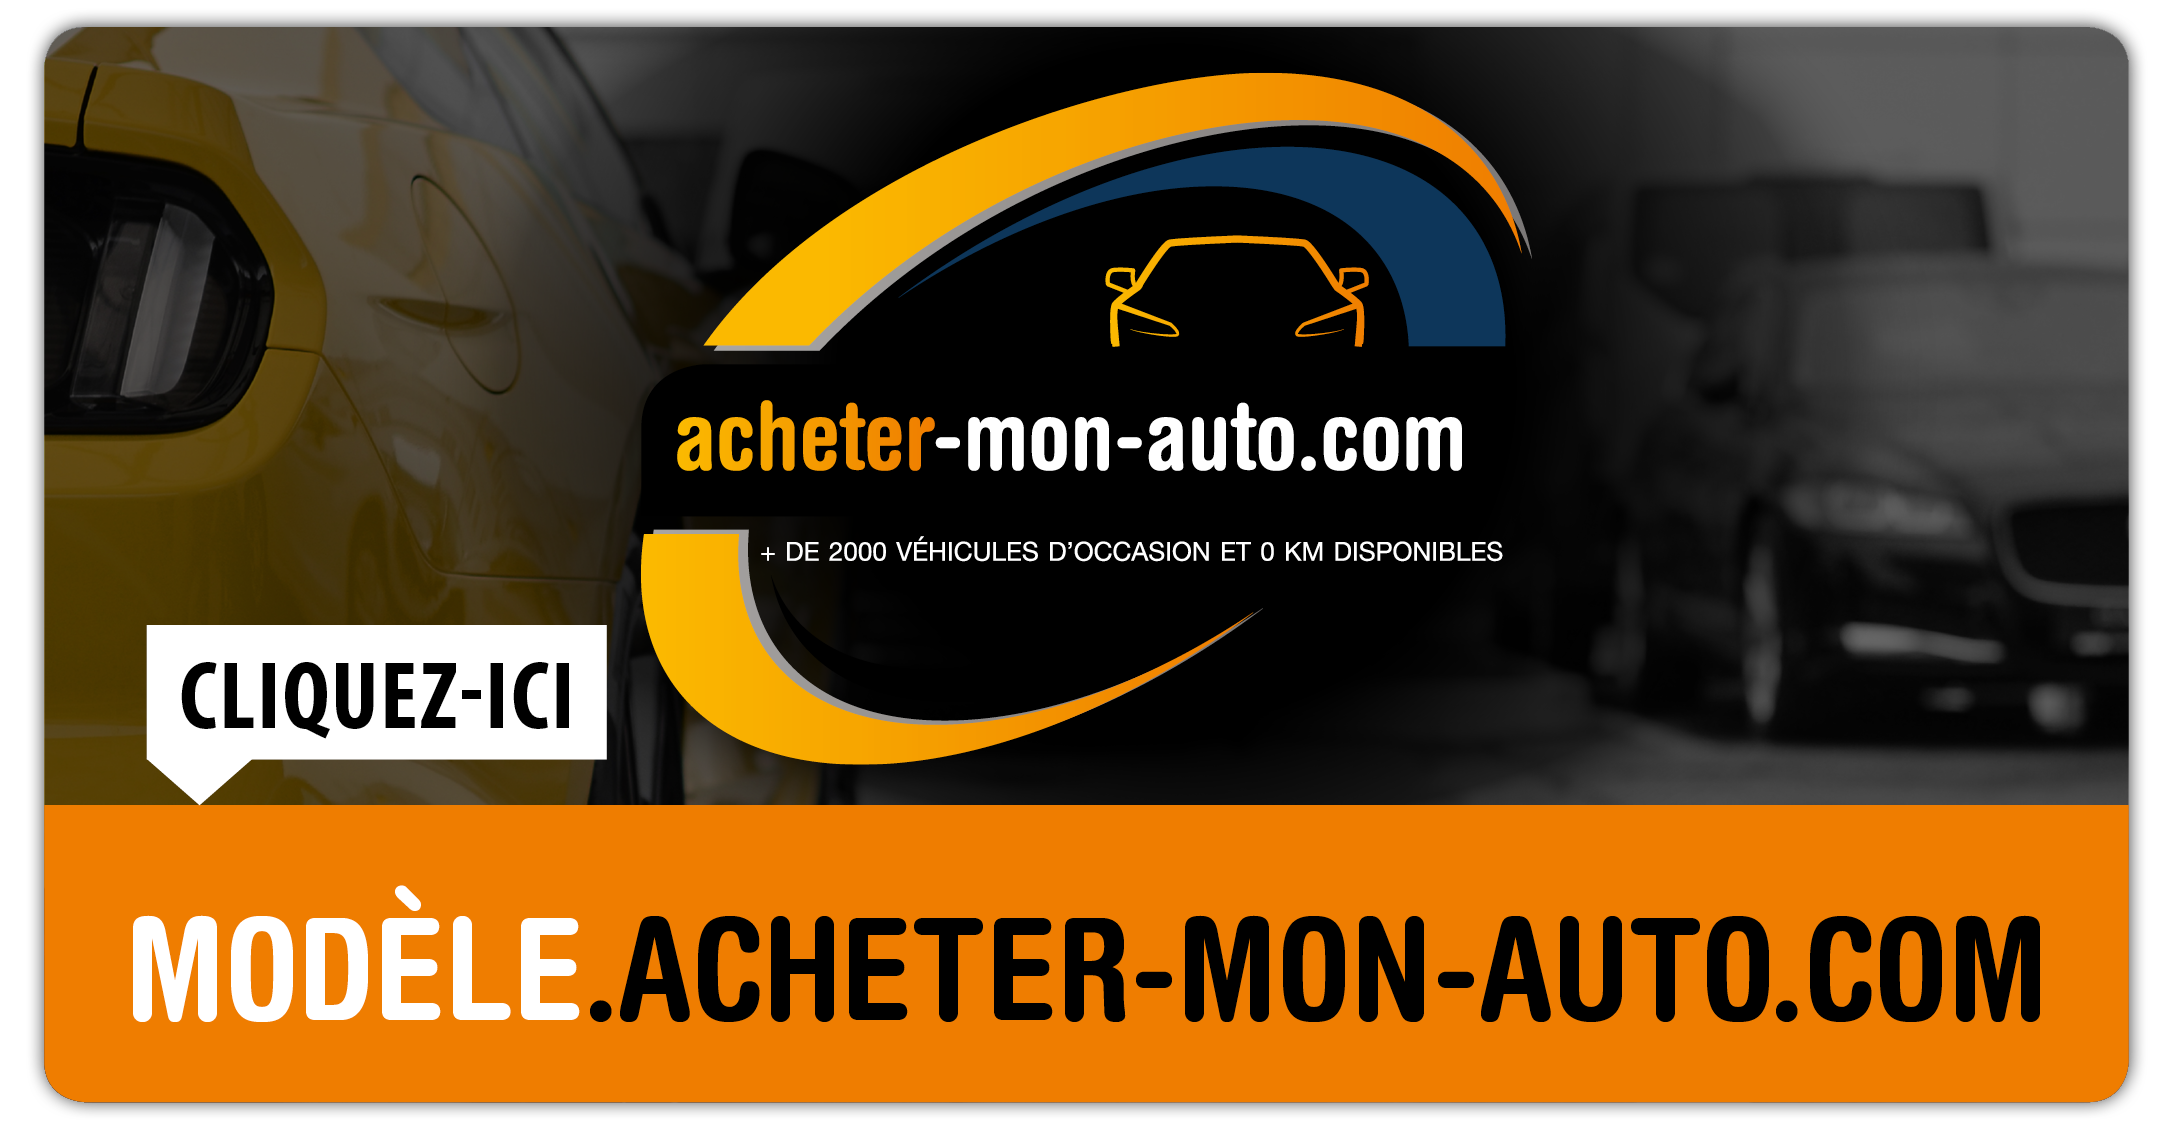 Collection 2 - Acheter Mon Auto